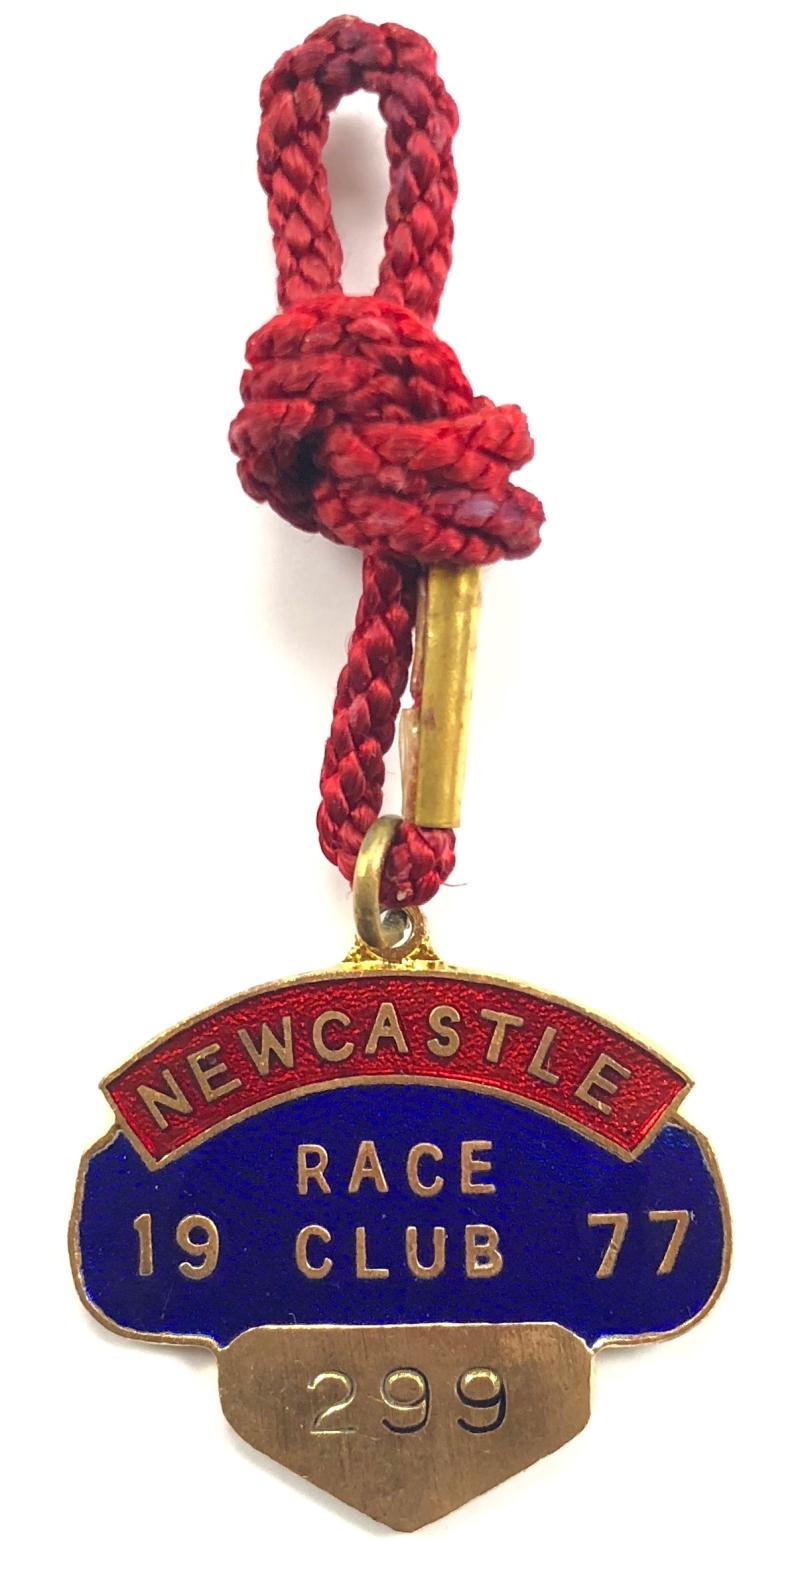 1977 Newcastle Race Club horse racing badge